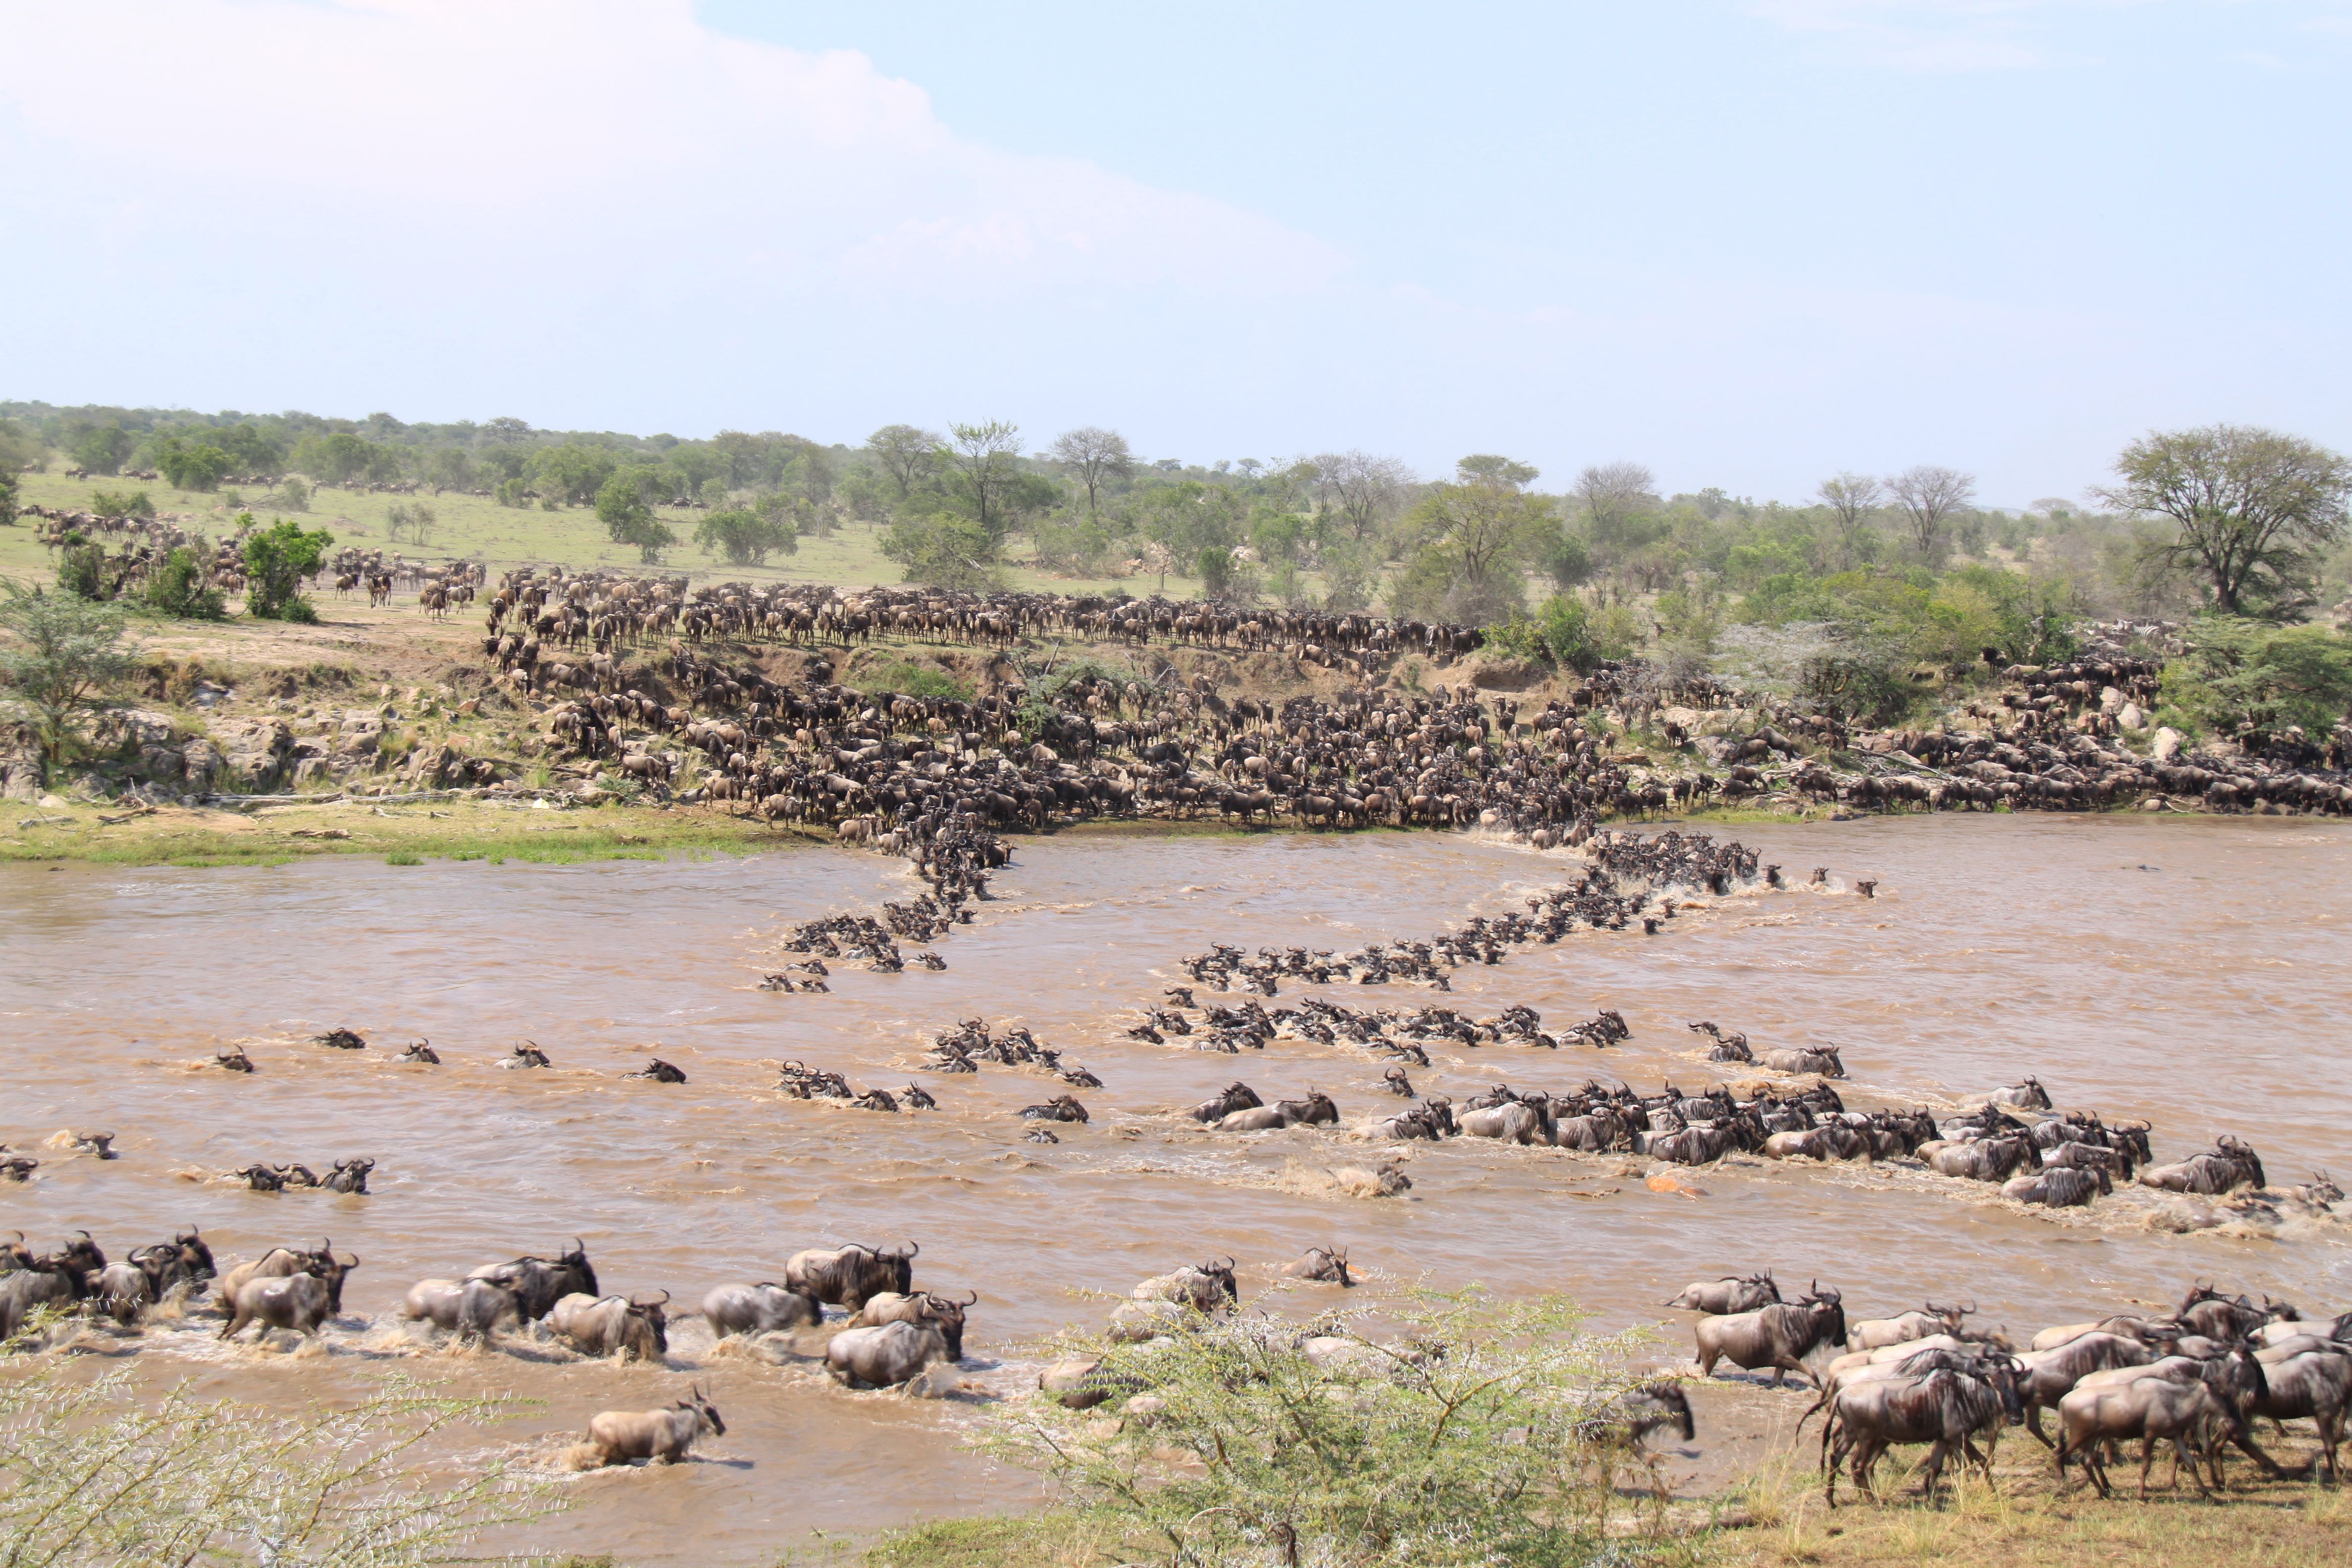 Safari Migration Special Crossing of Wildebeest migration in Tanzania